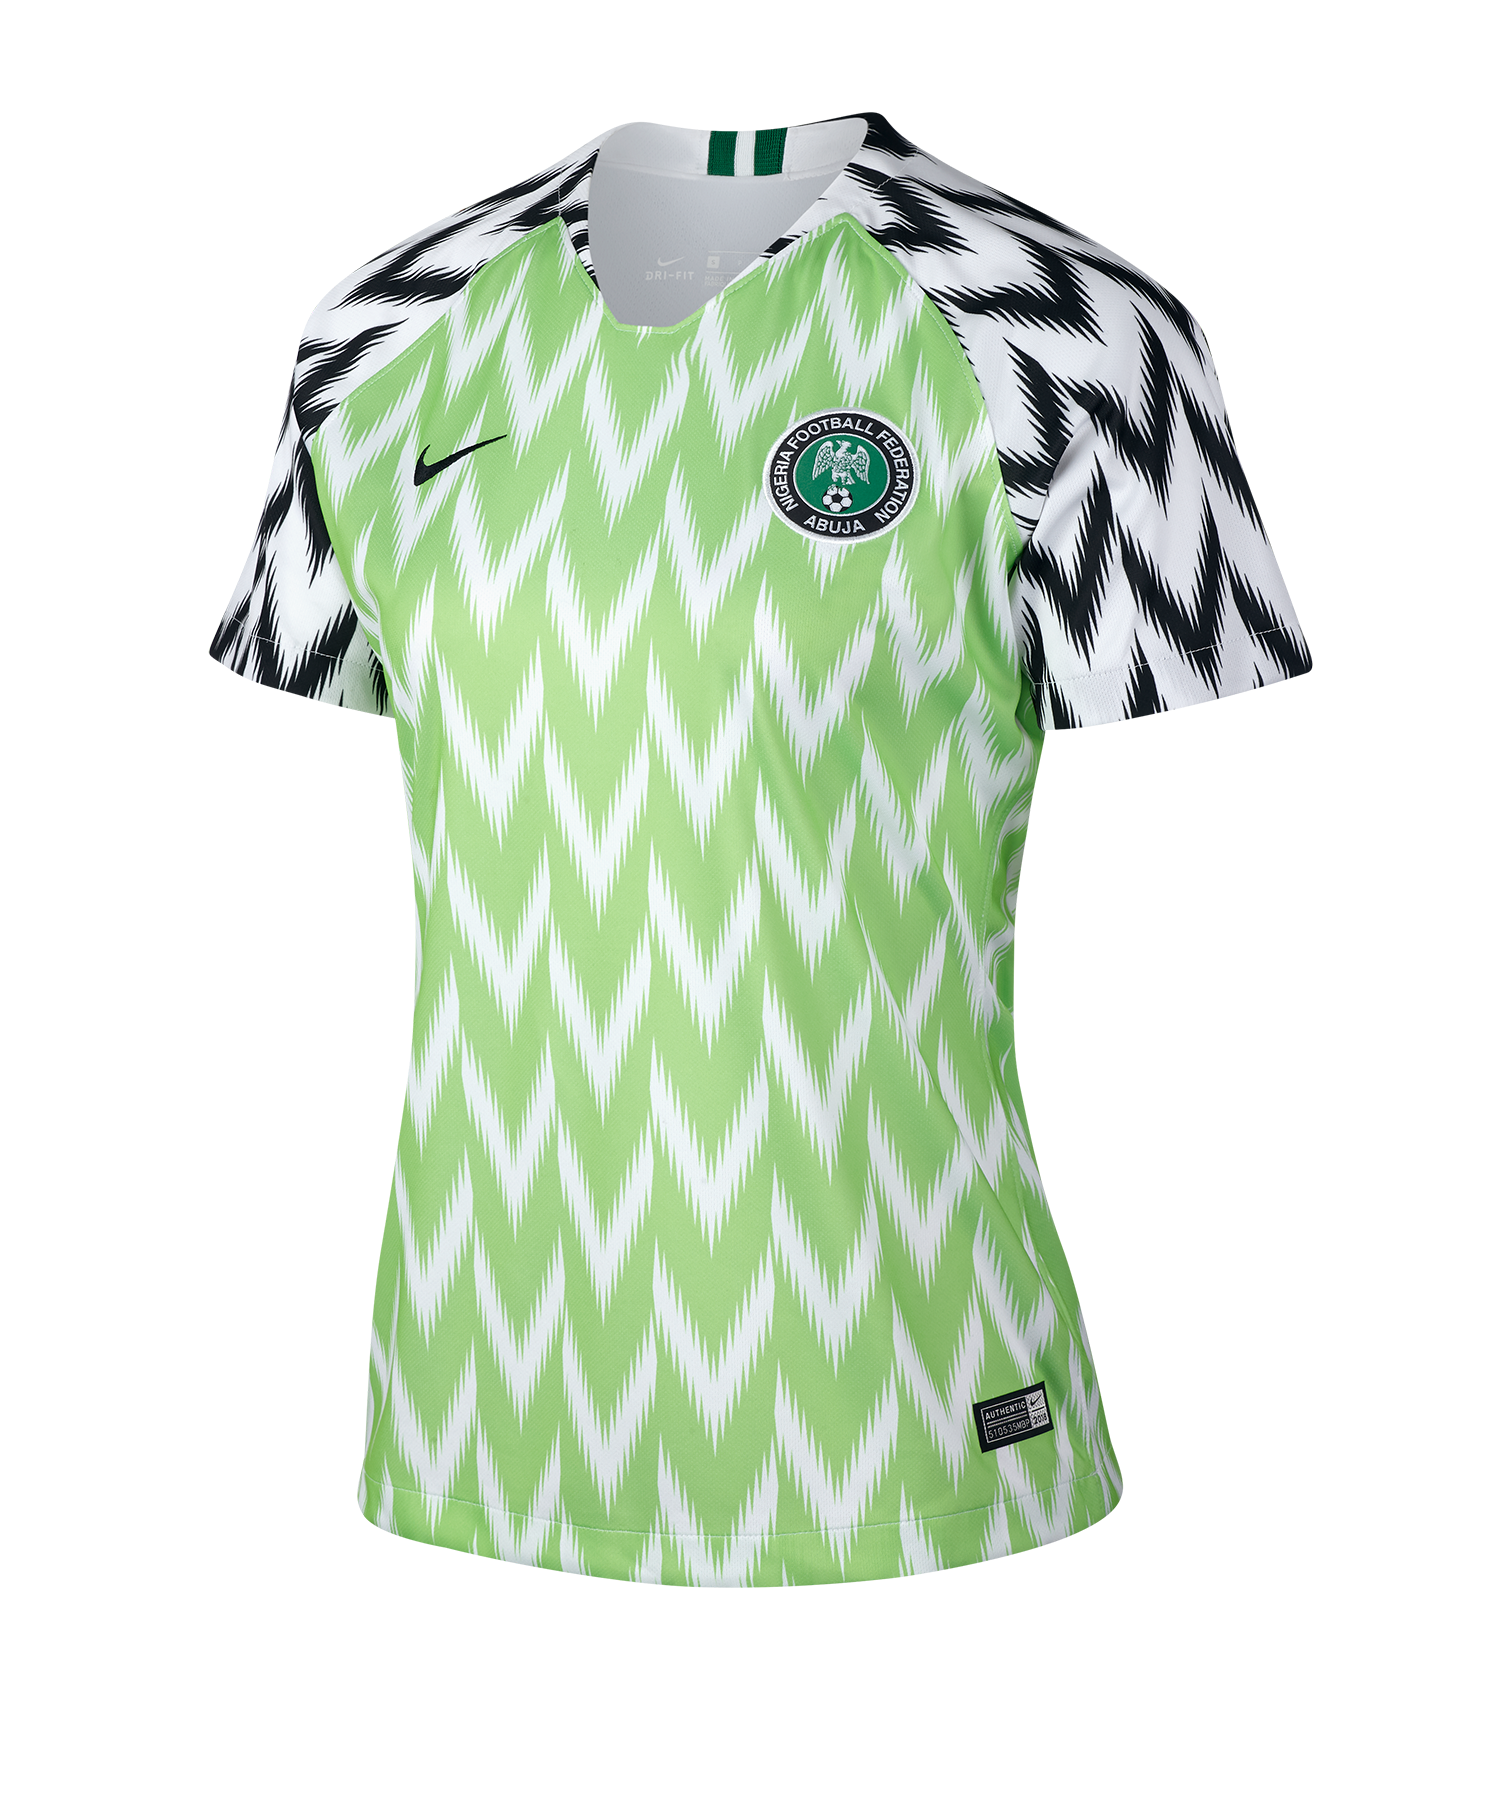 Nike Nigeria 2019 Stadium Home Jersey White/Black Men's - SS19 - US